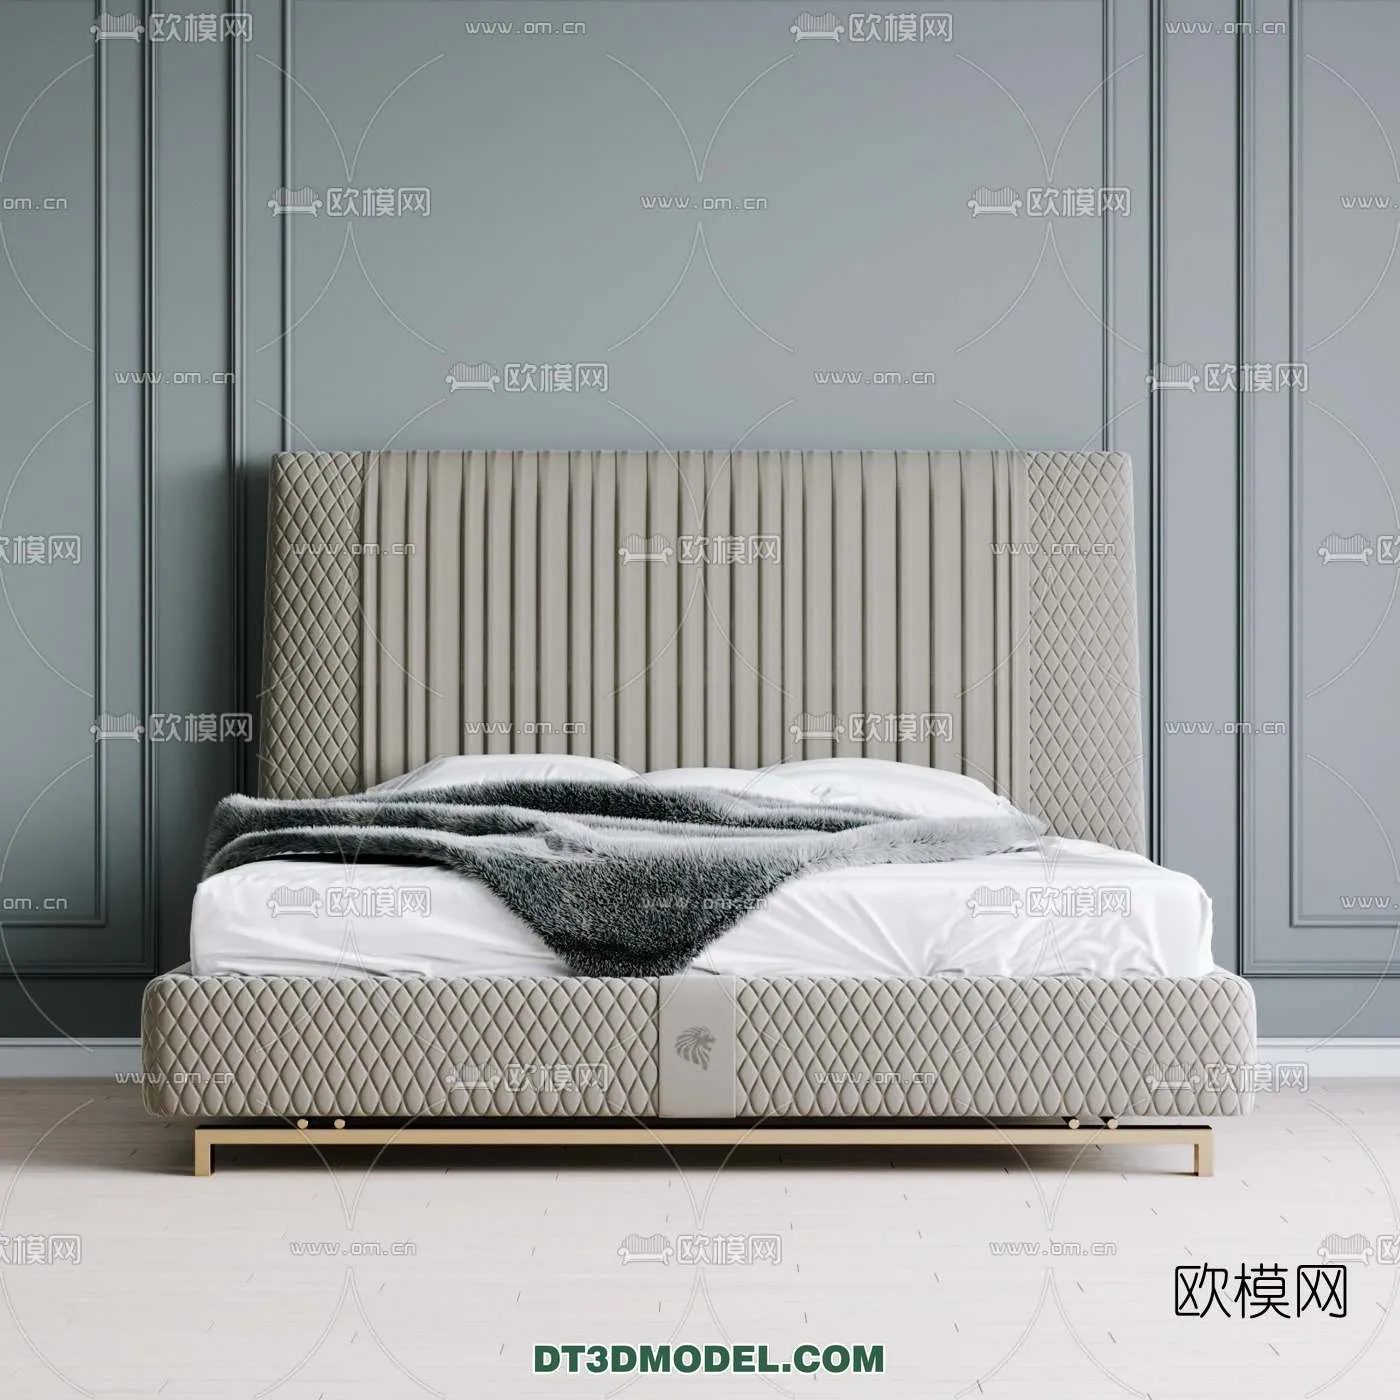 Double Bed 3D Models – 0003